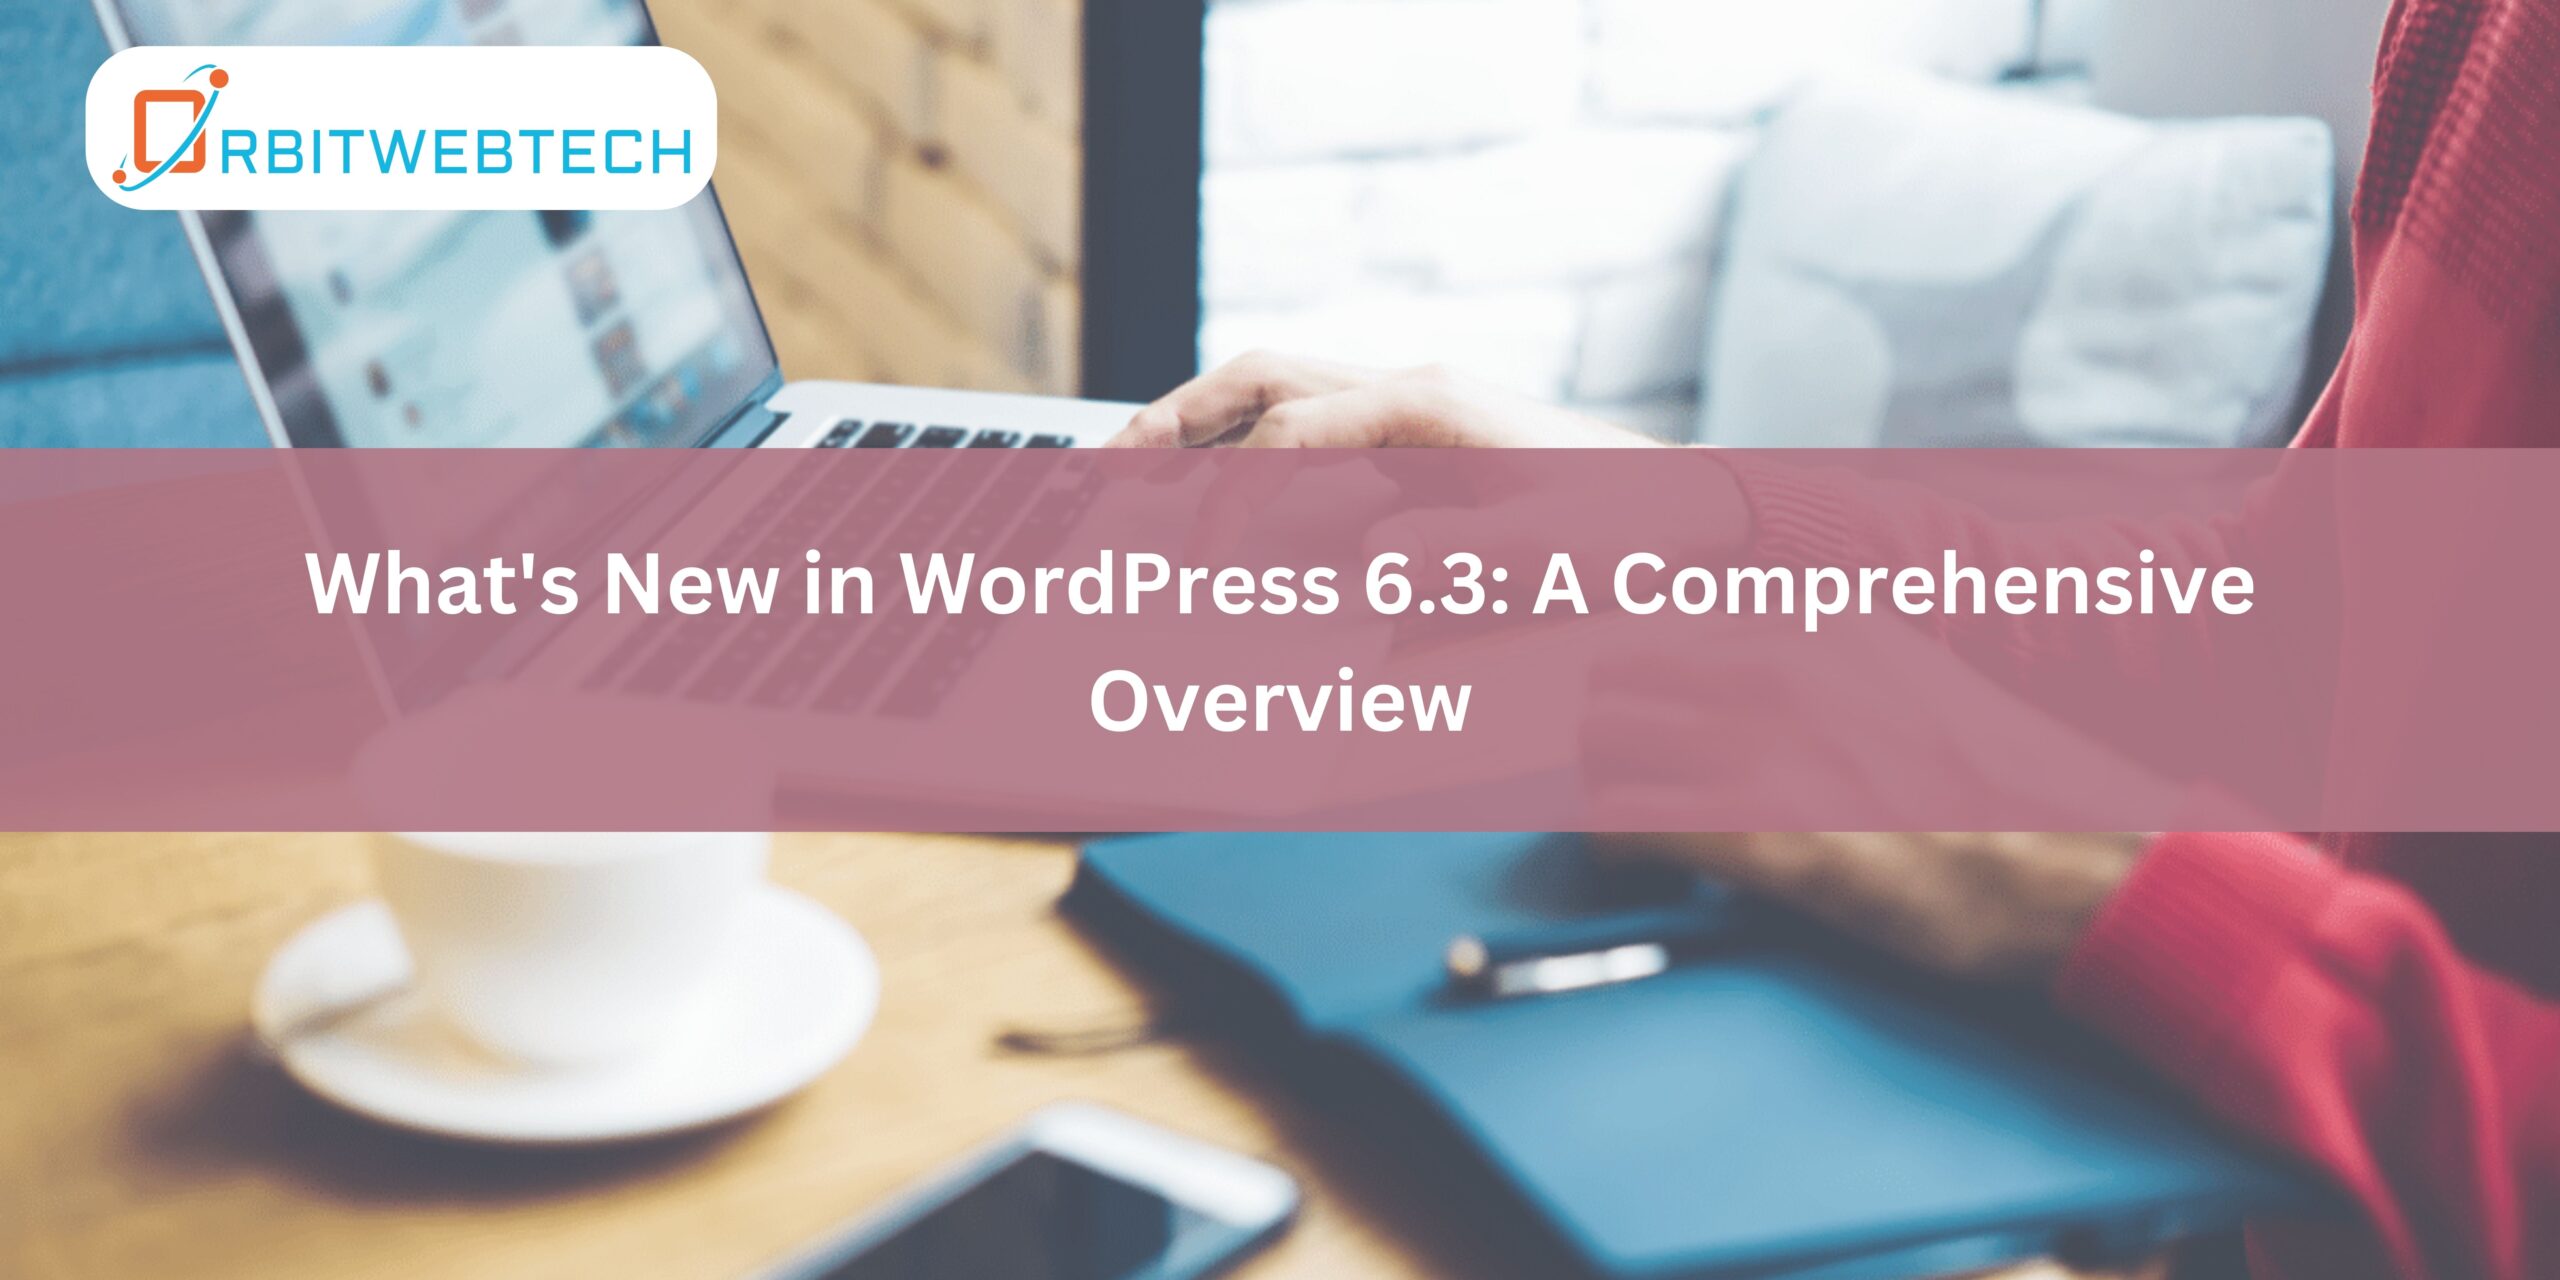 What’s New in WordPress 6.3